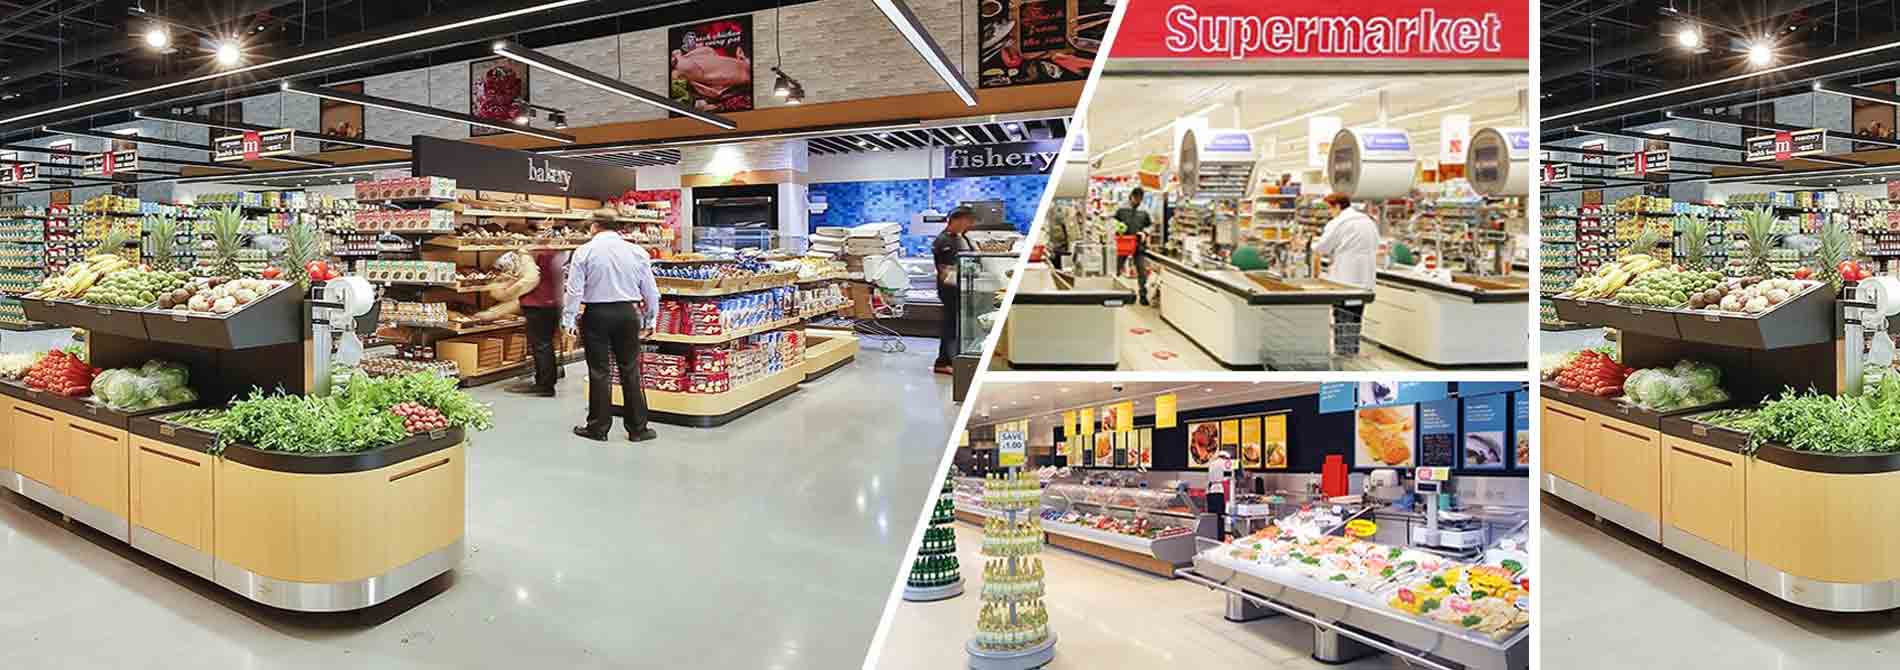 Supermarket Equipment & Refrigeration Supplier in Dubai UAE